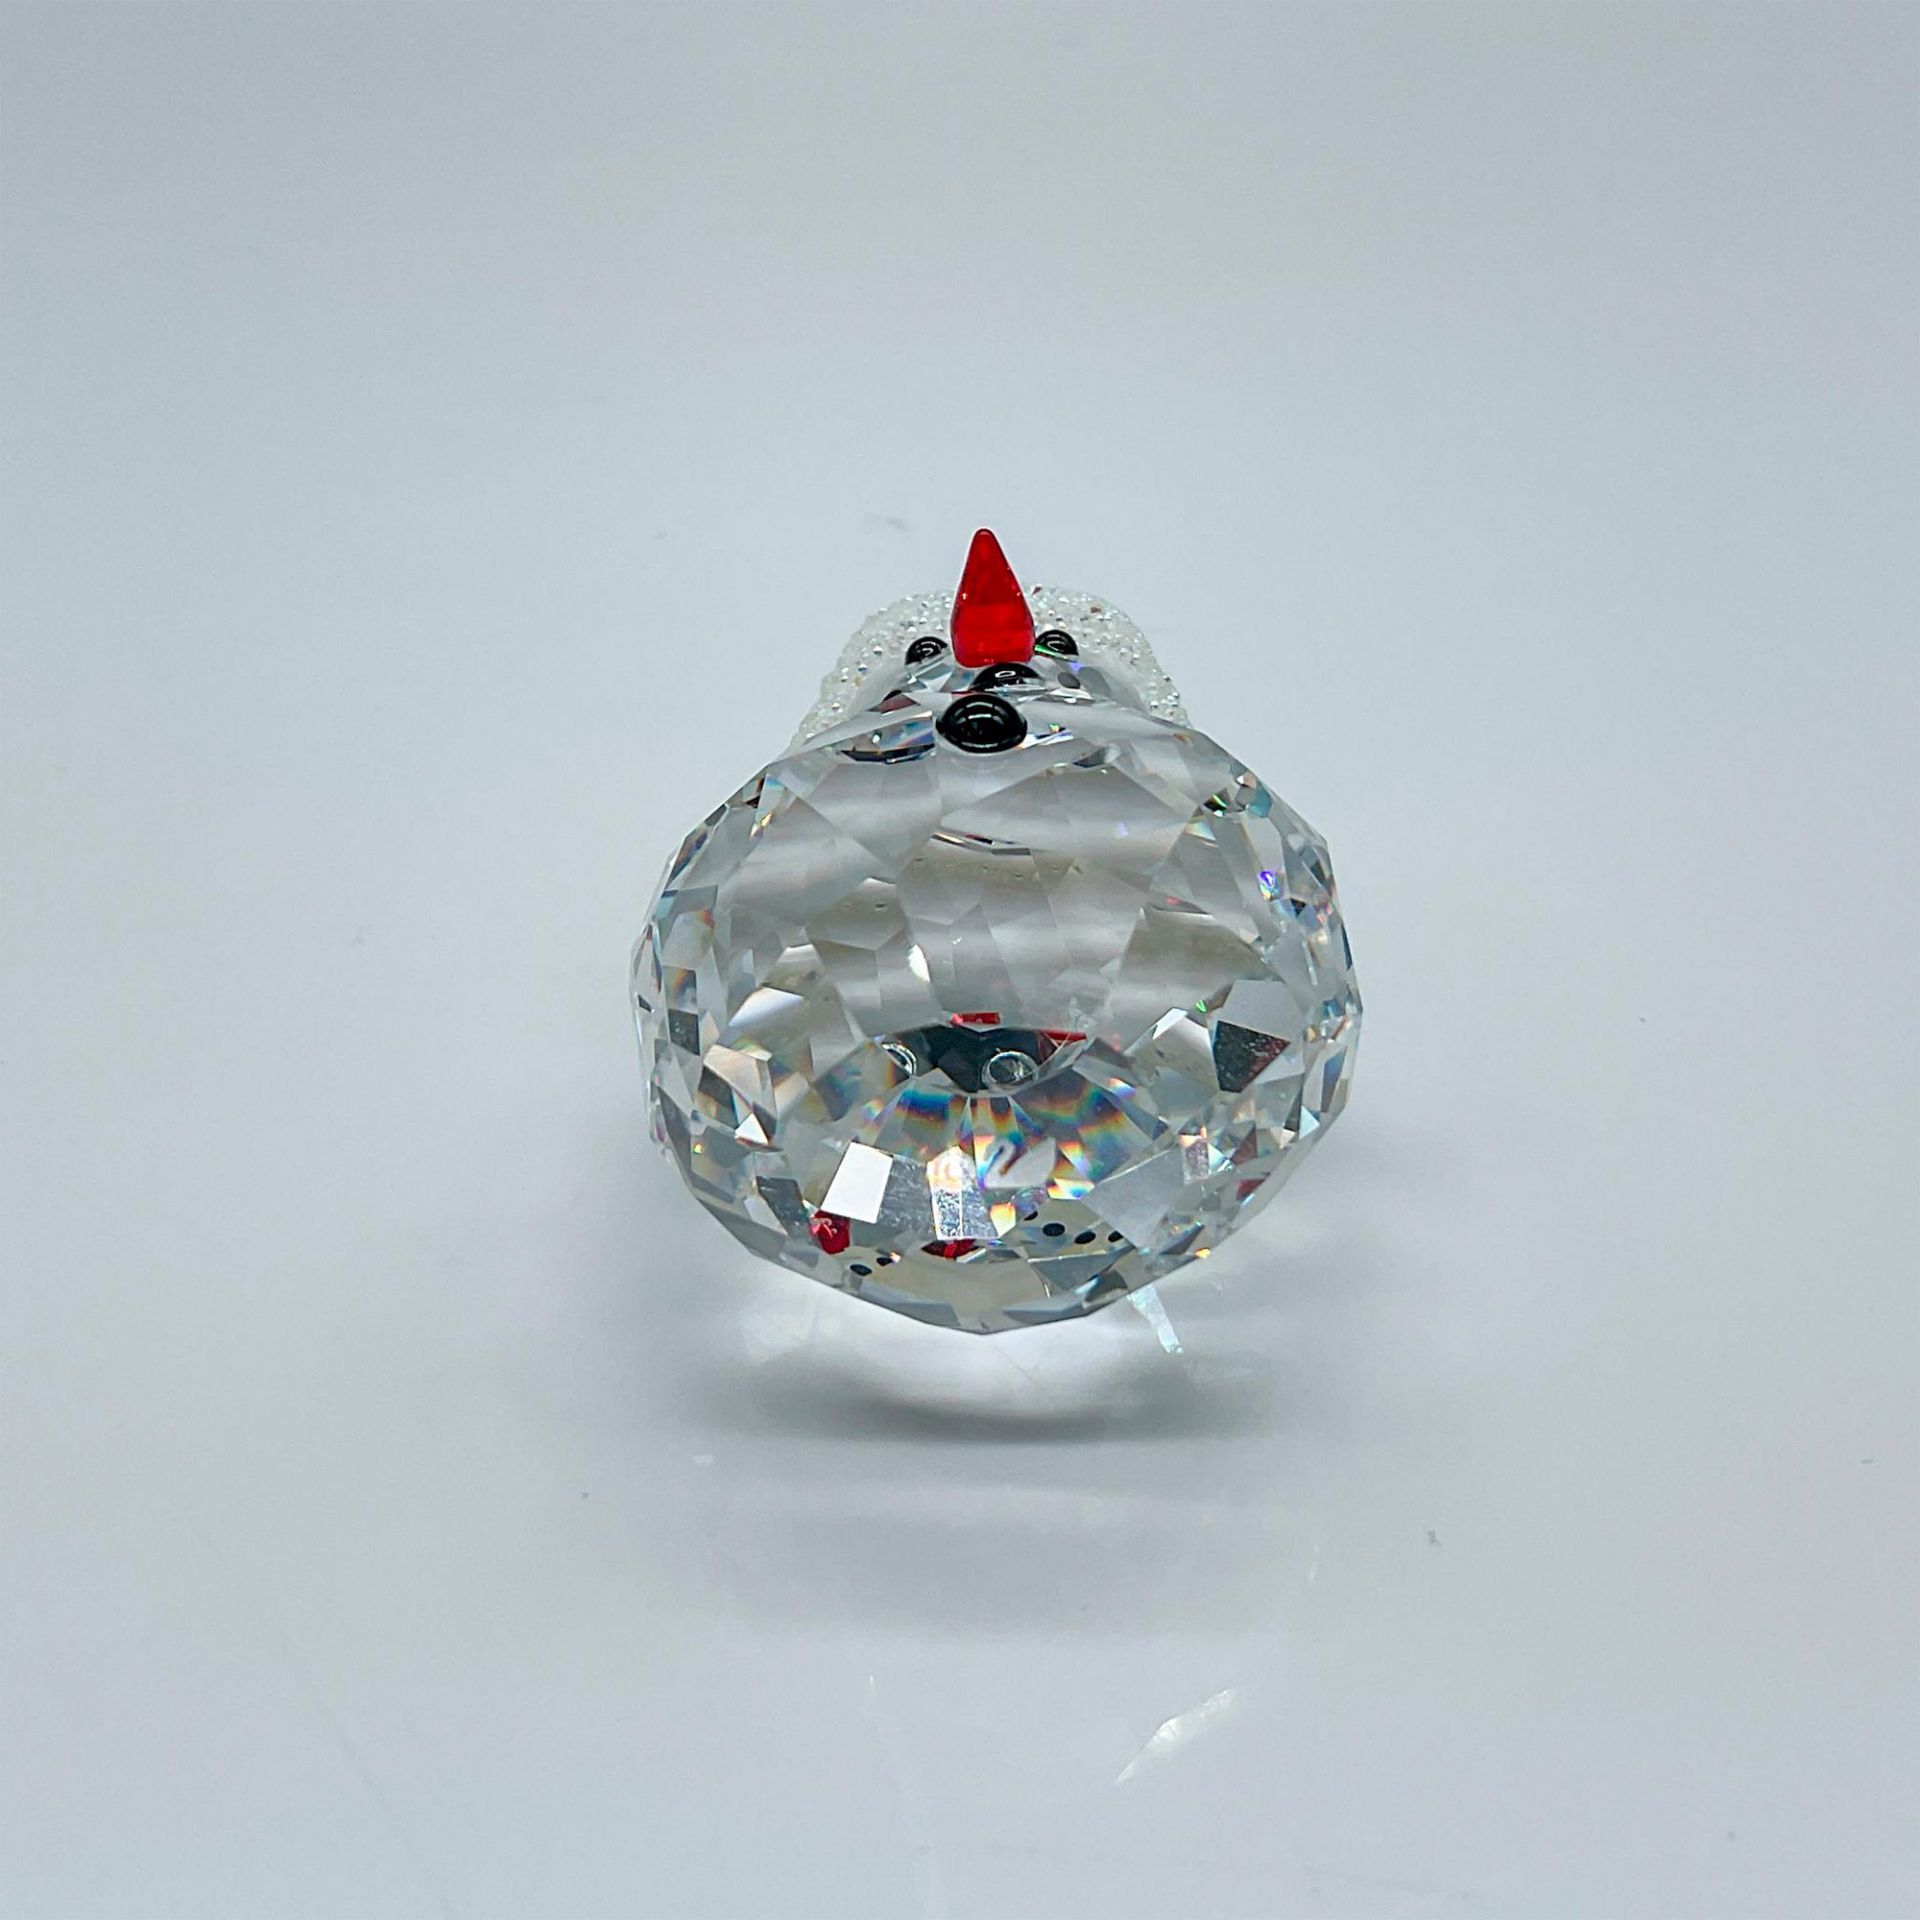 Swarovski Crystal Figurine, Snowman - Image 3 of 3